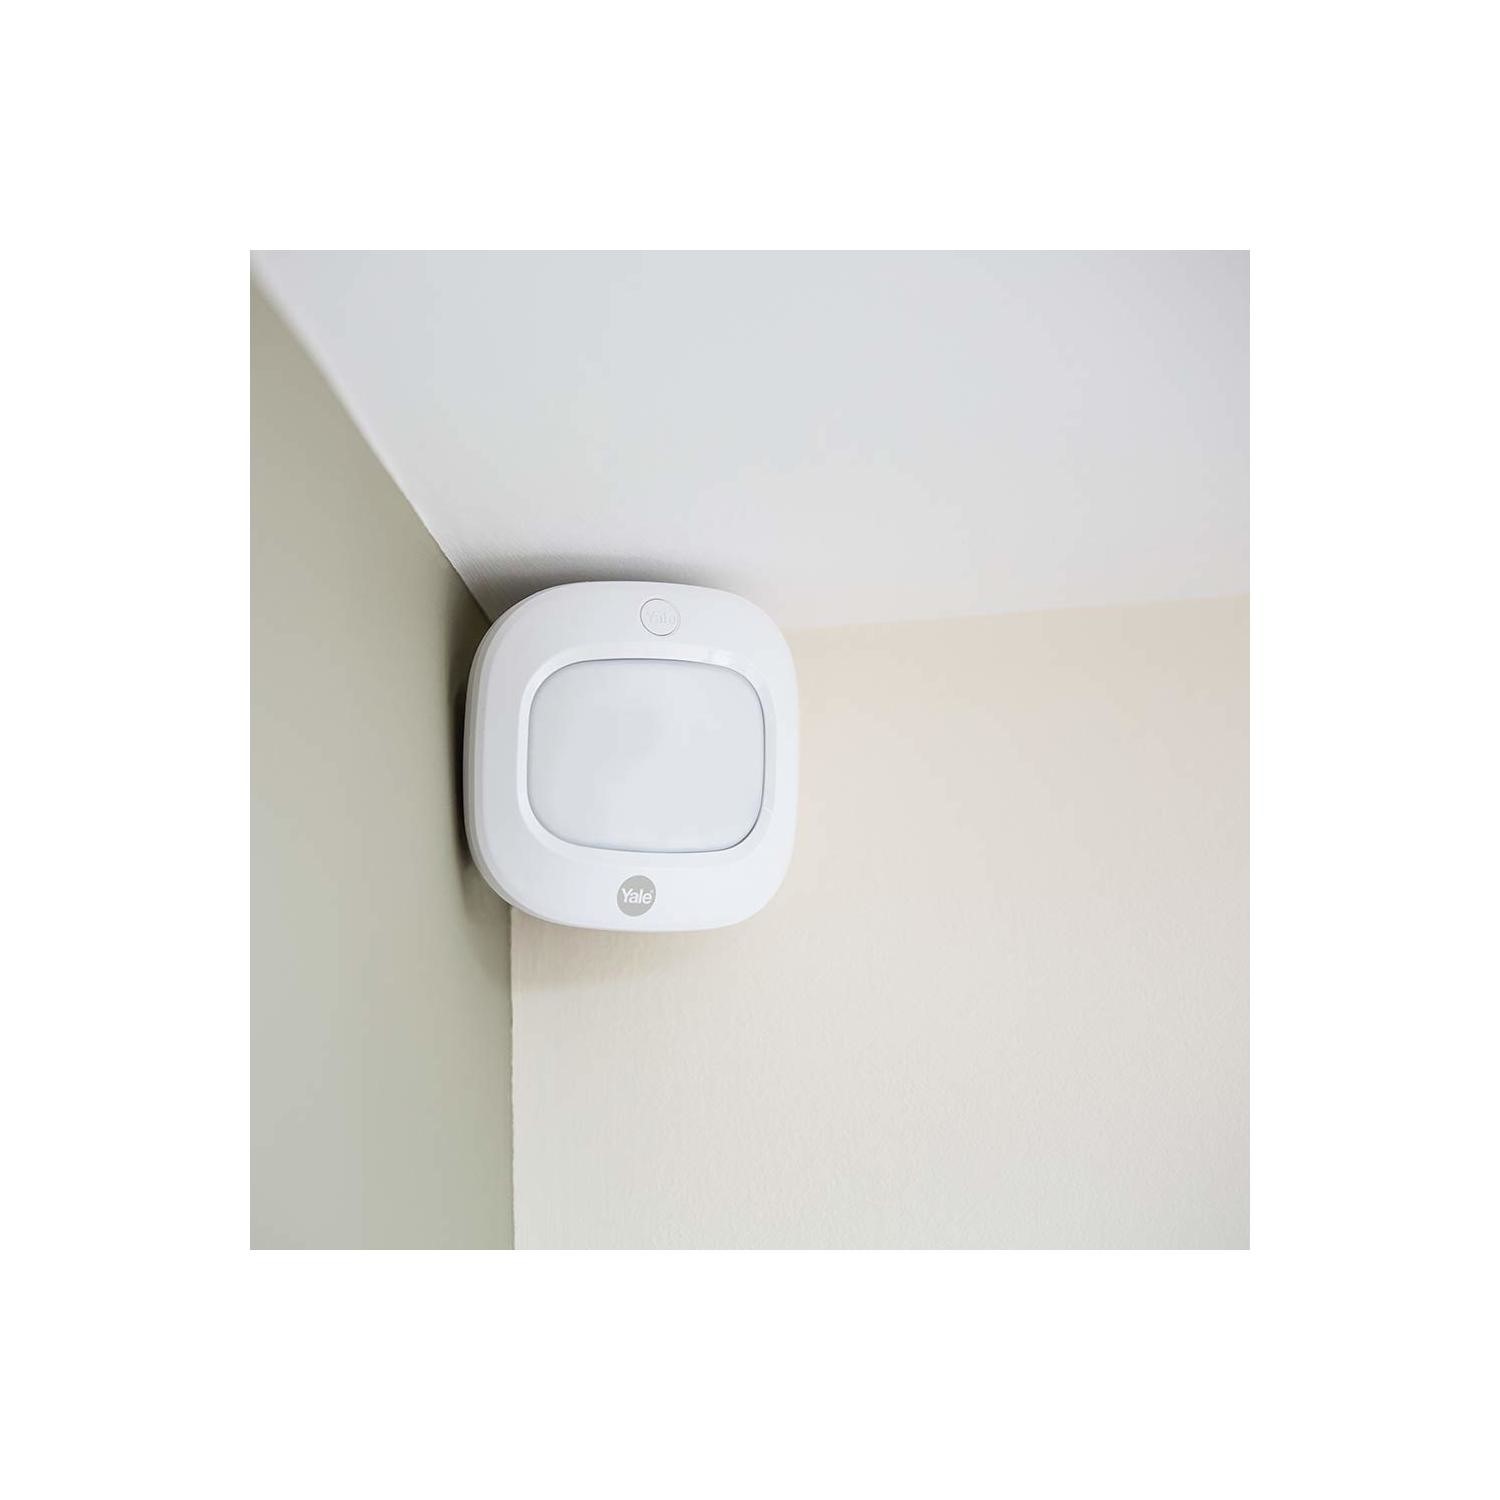 Refurbished 1 Year Guarantee Yale Sync Smart Home Alarm Starter Kit IA-310 